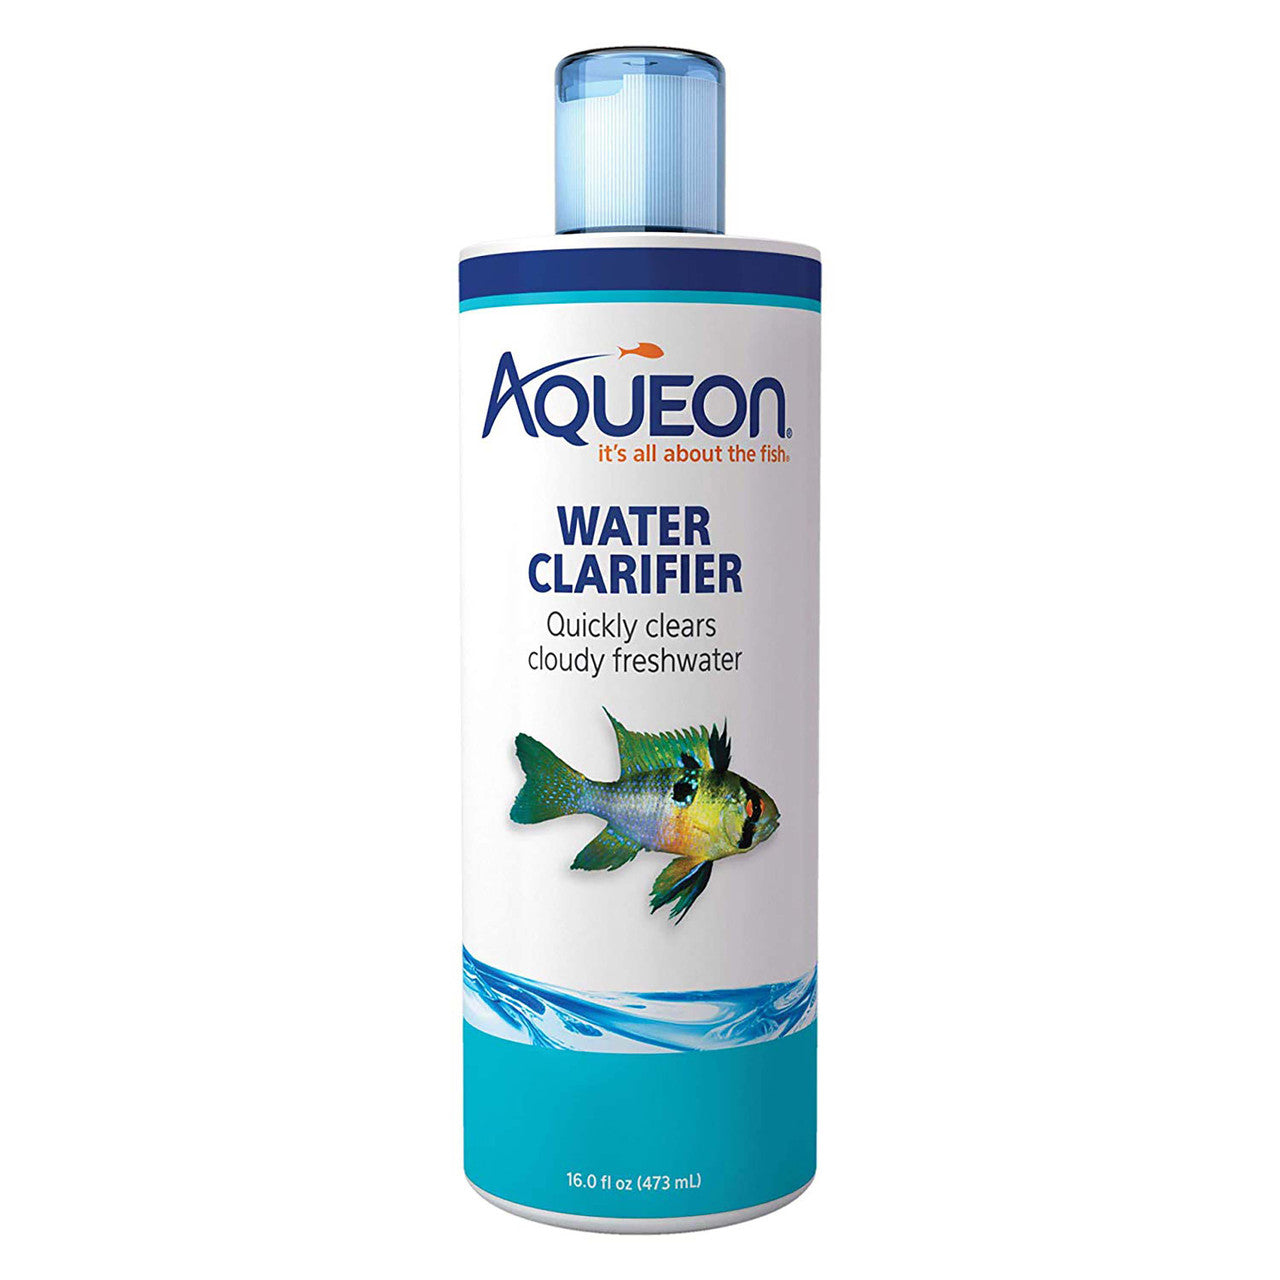 Aqueon Water Clarifier 16 Fluid Ounces